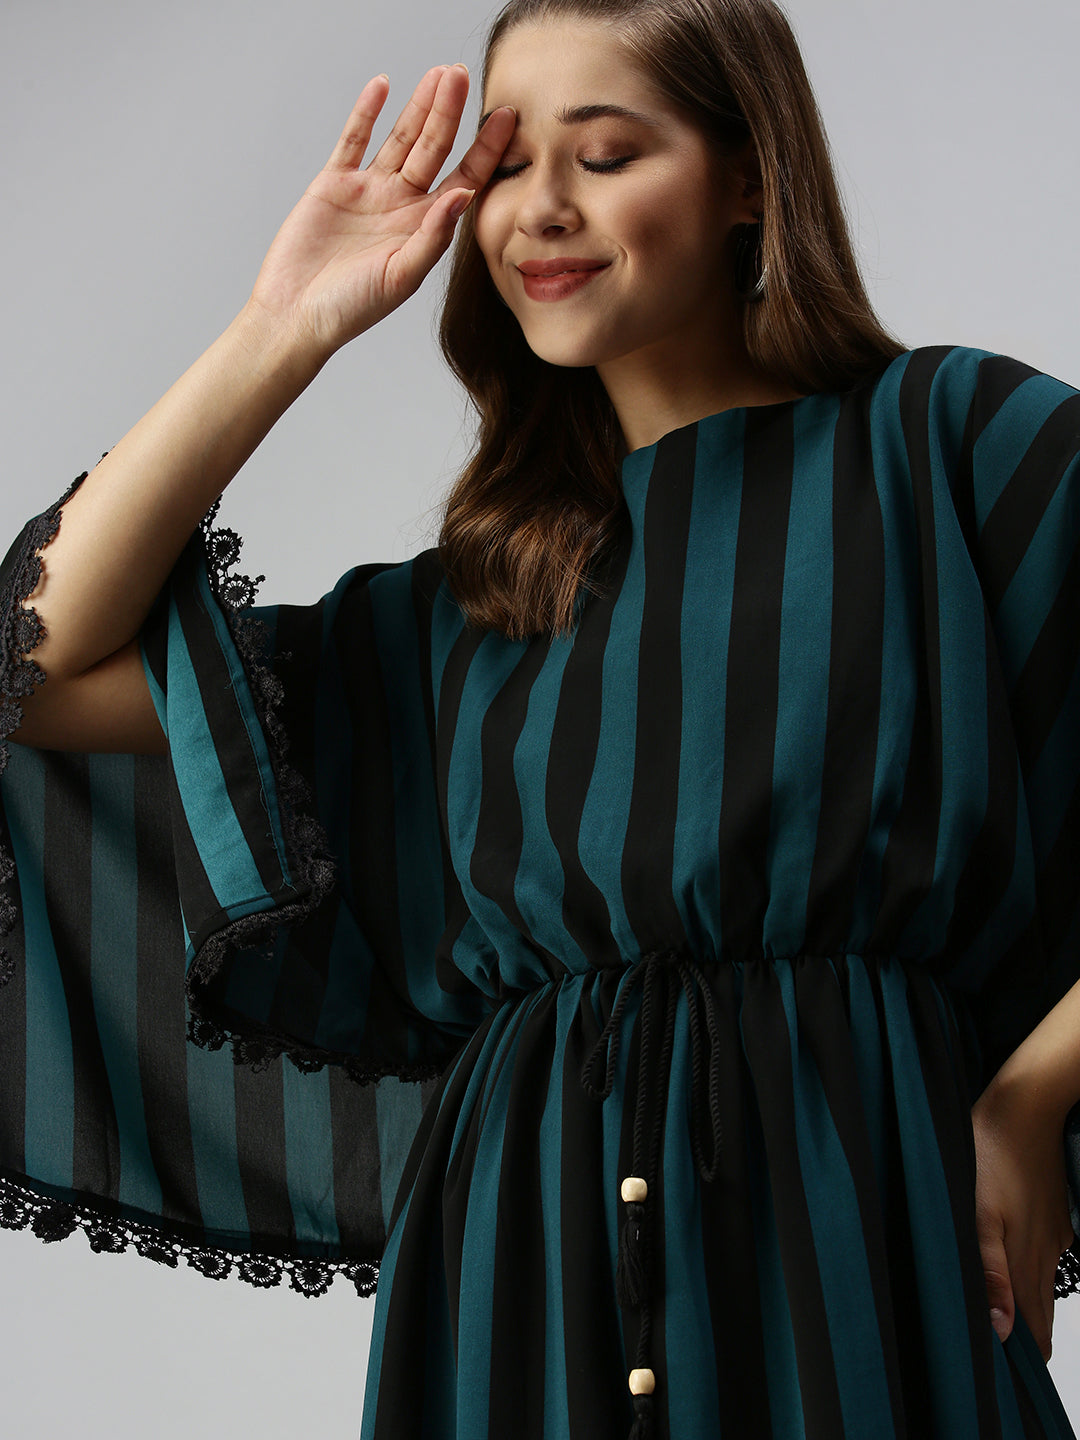 Women's Black Striped Kaftan Dress